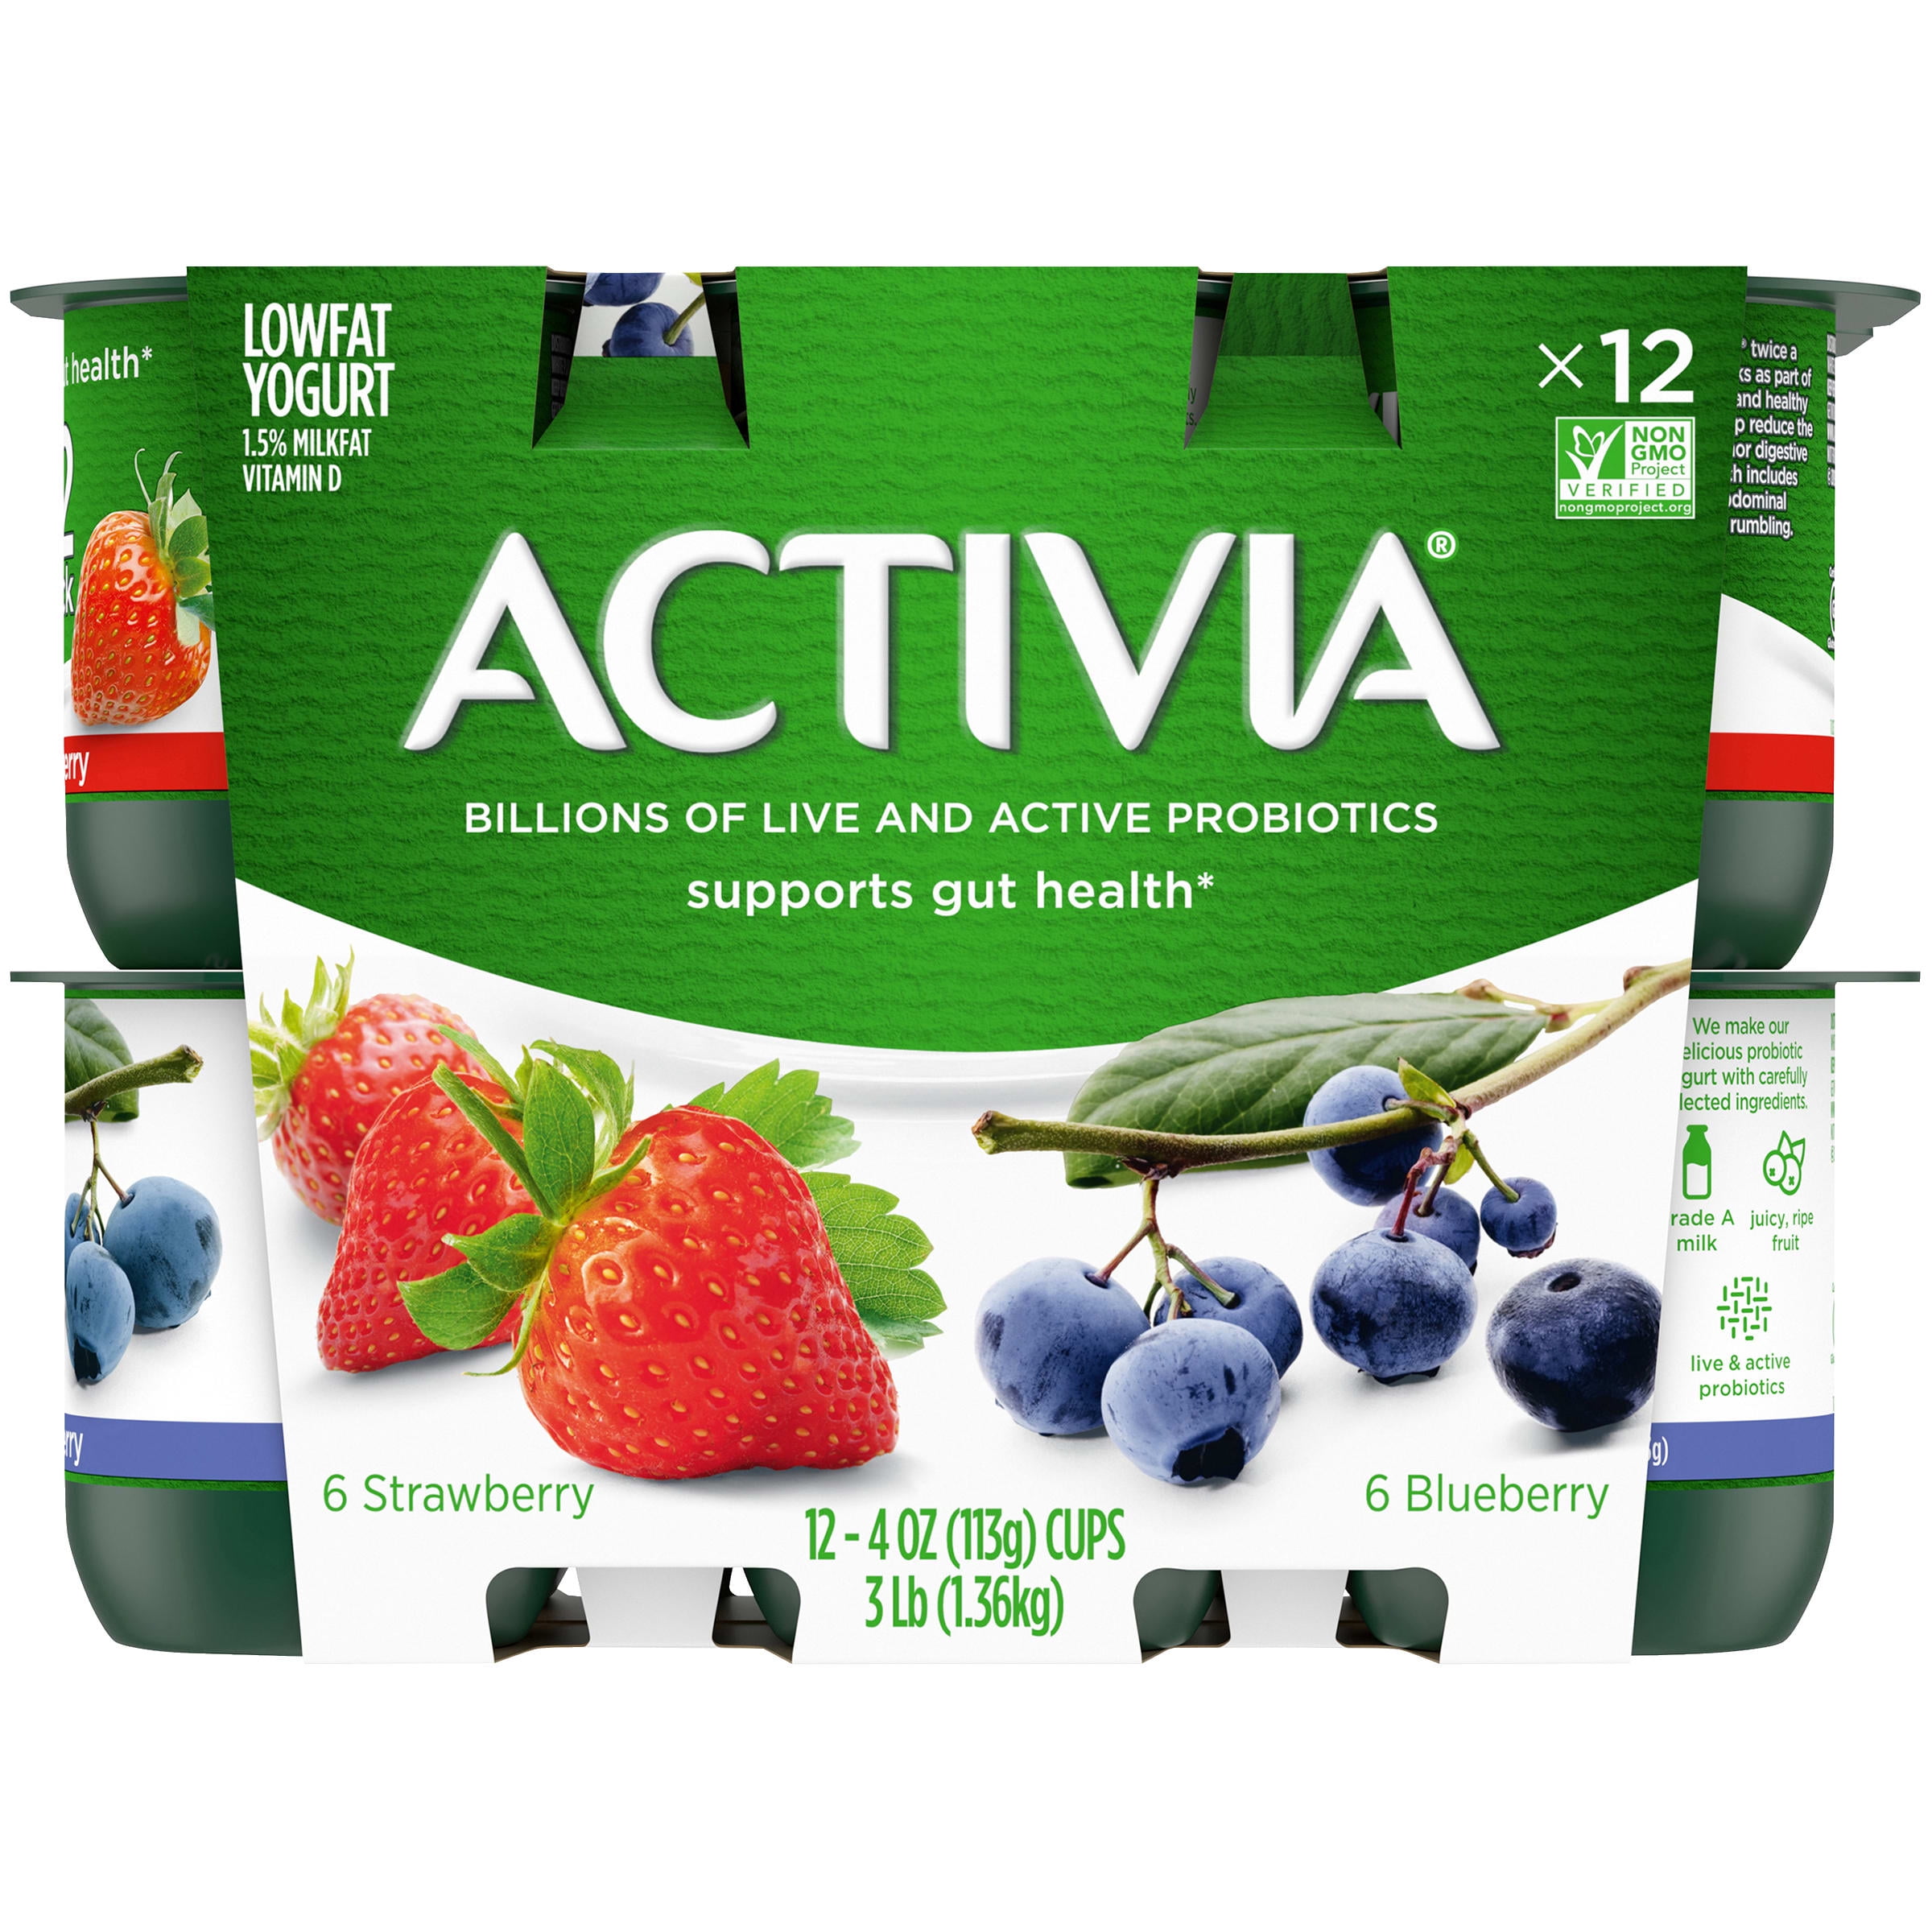 Cups, Yogurt Lowfat 12 and oz, Probiotic Count Yogurt, 4 Activia Blueberry Strawberry